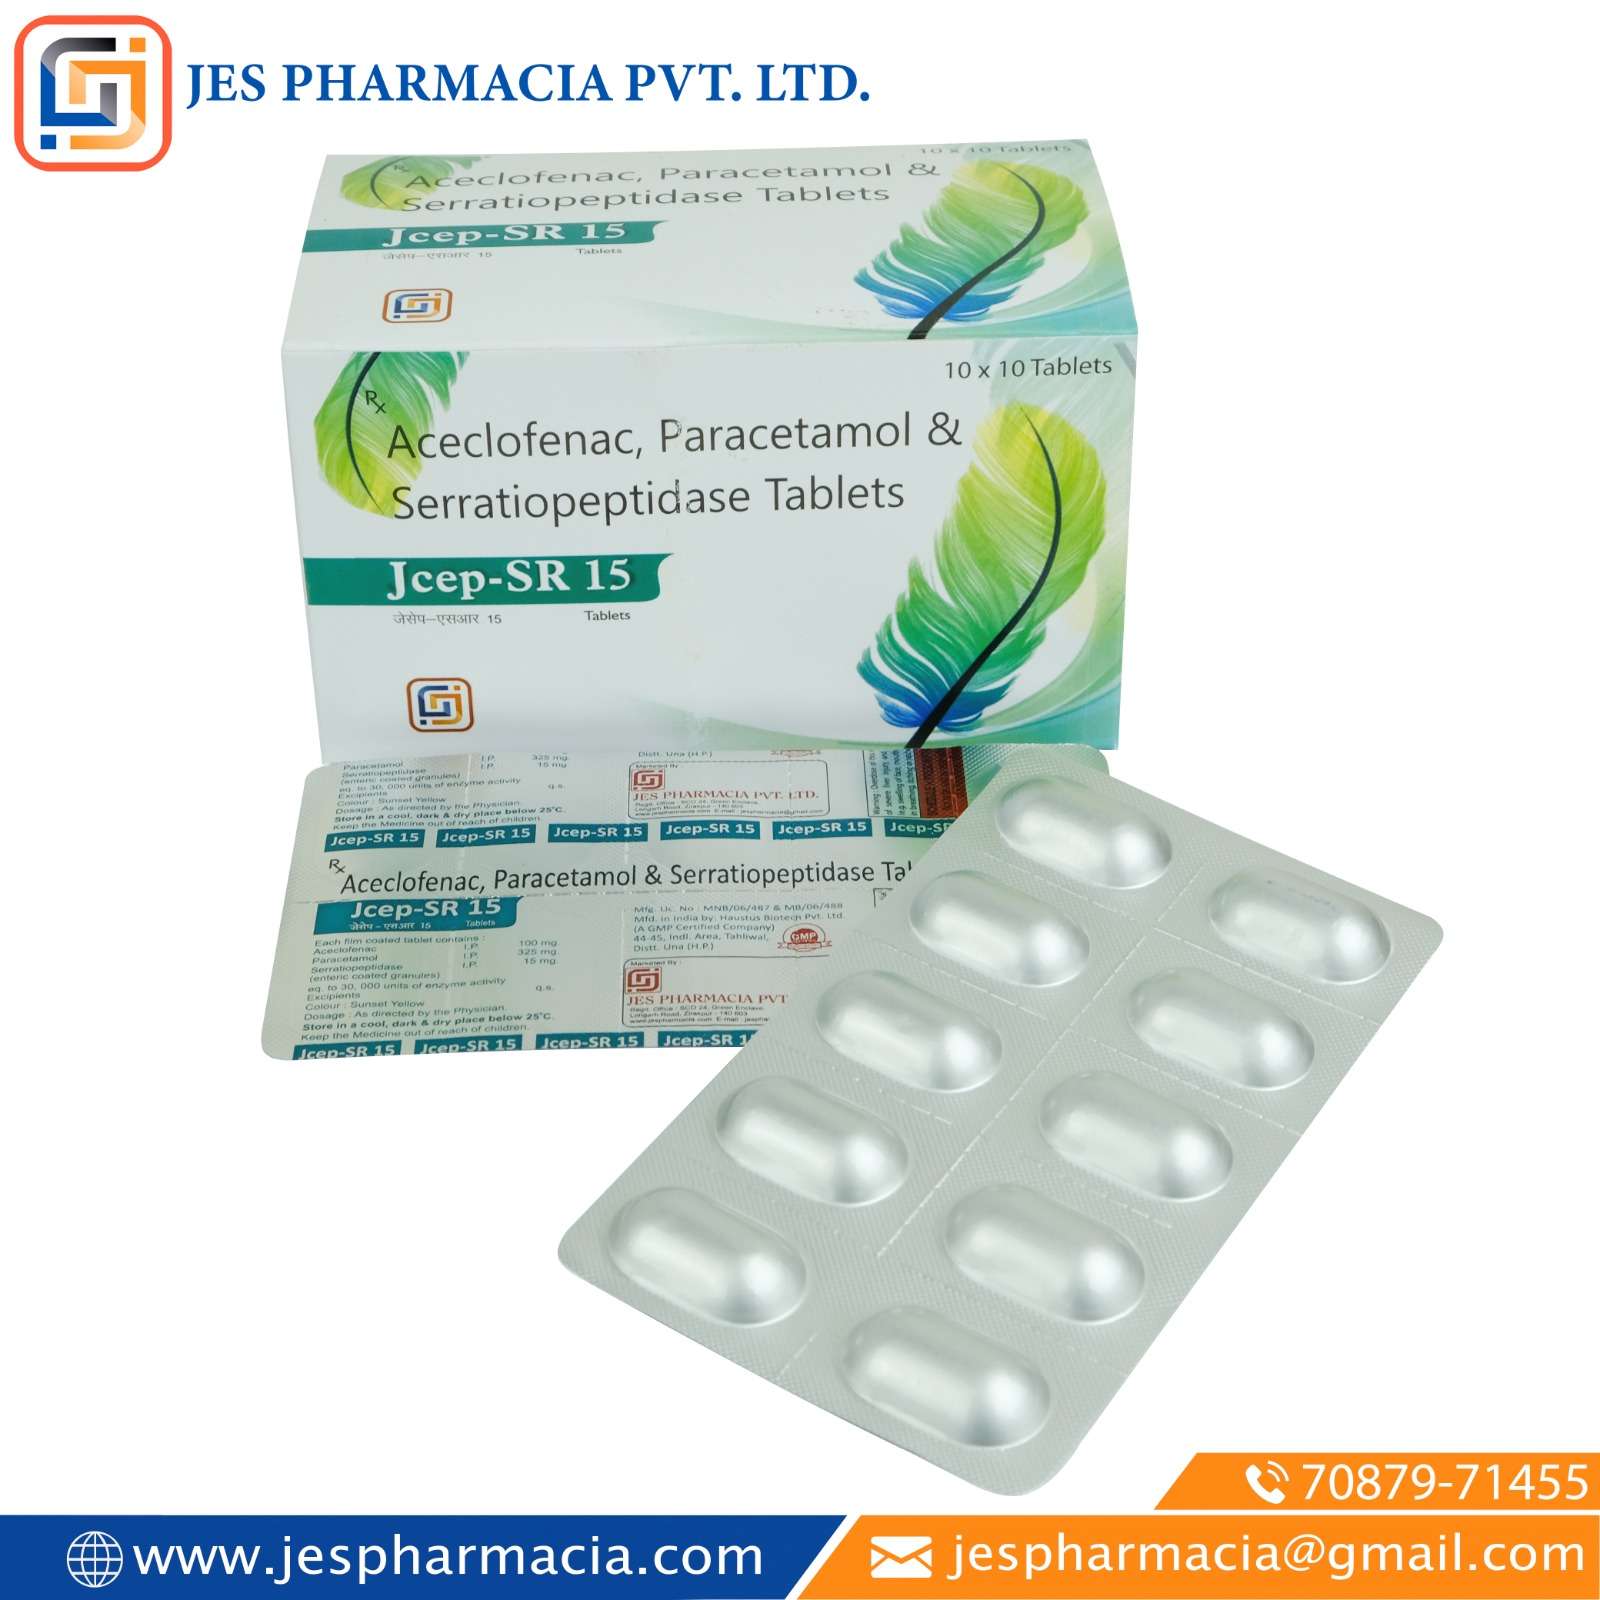 aceclofenac 100 mg + paracetamol 325mg + serratiopeptidase 15mg tablet